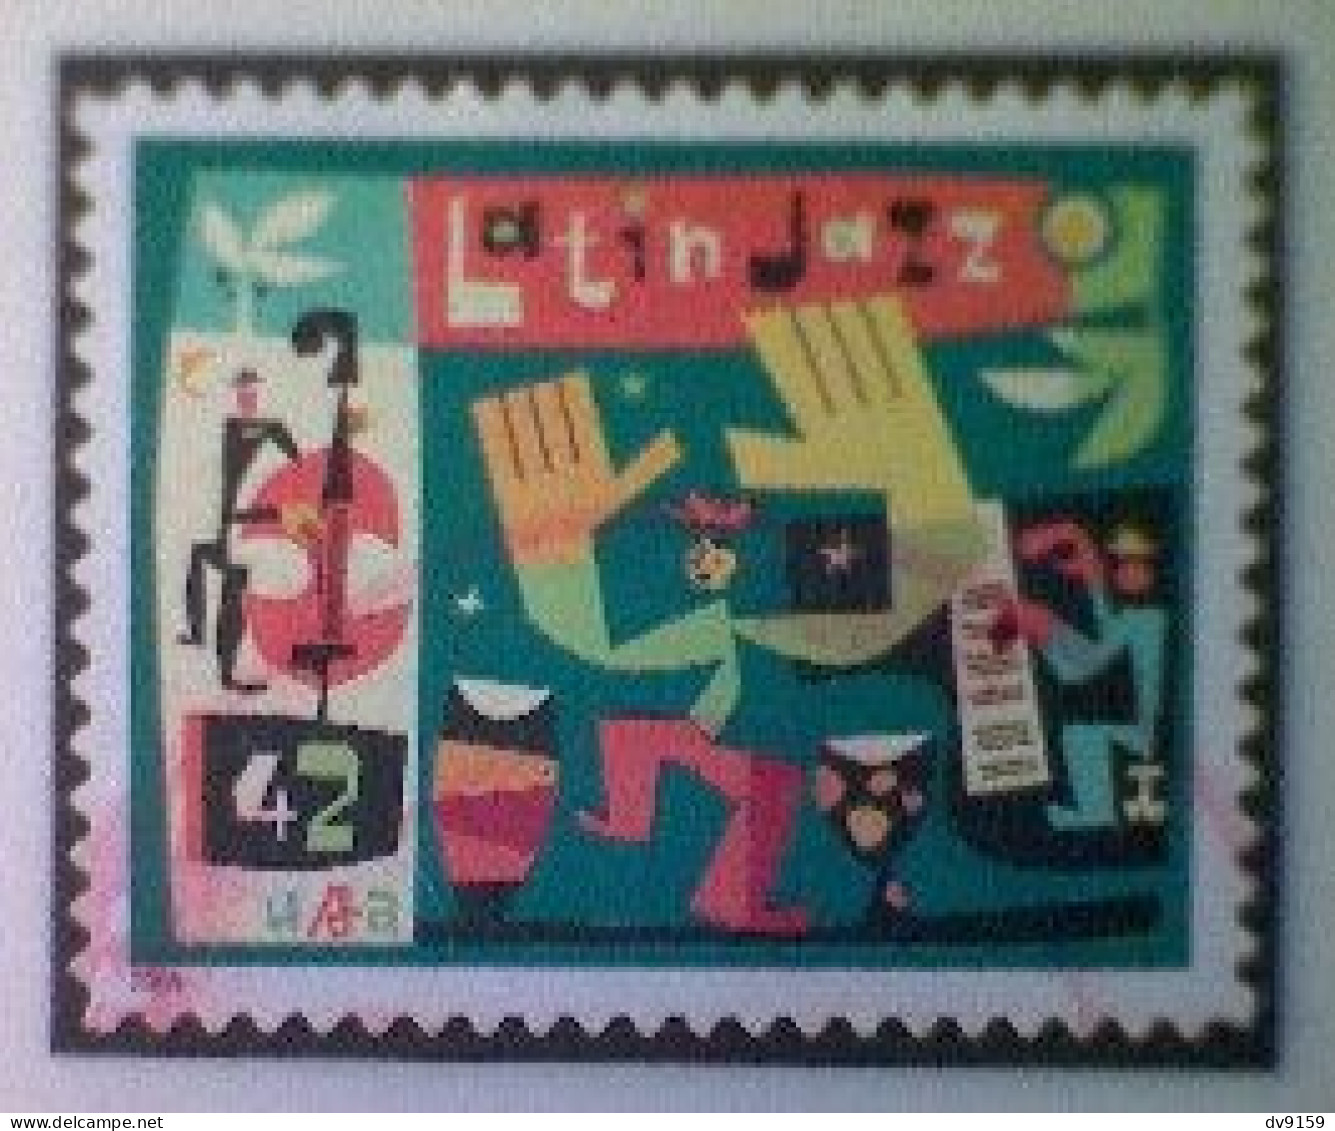 United States, Scott #4349, Used(o), 2008, Latin Jazz, 42¢, Multicolored - Used Stamps